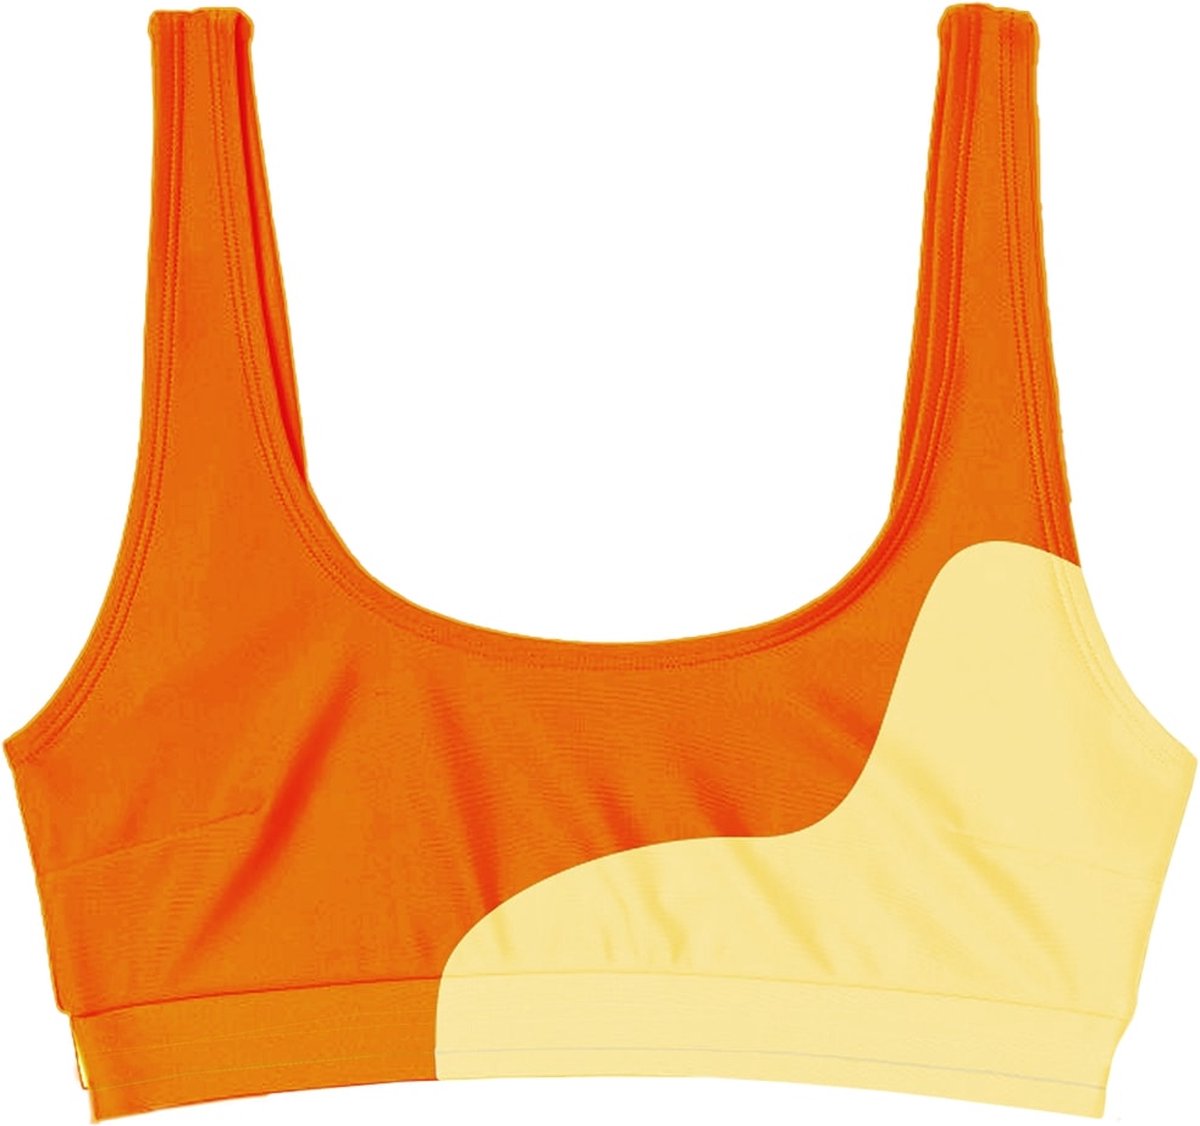 Sea'sons Official - Kleurveranderend - Brassiere Bikini Top - Oranje-Rood - XS